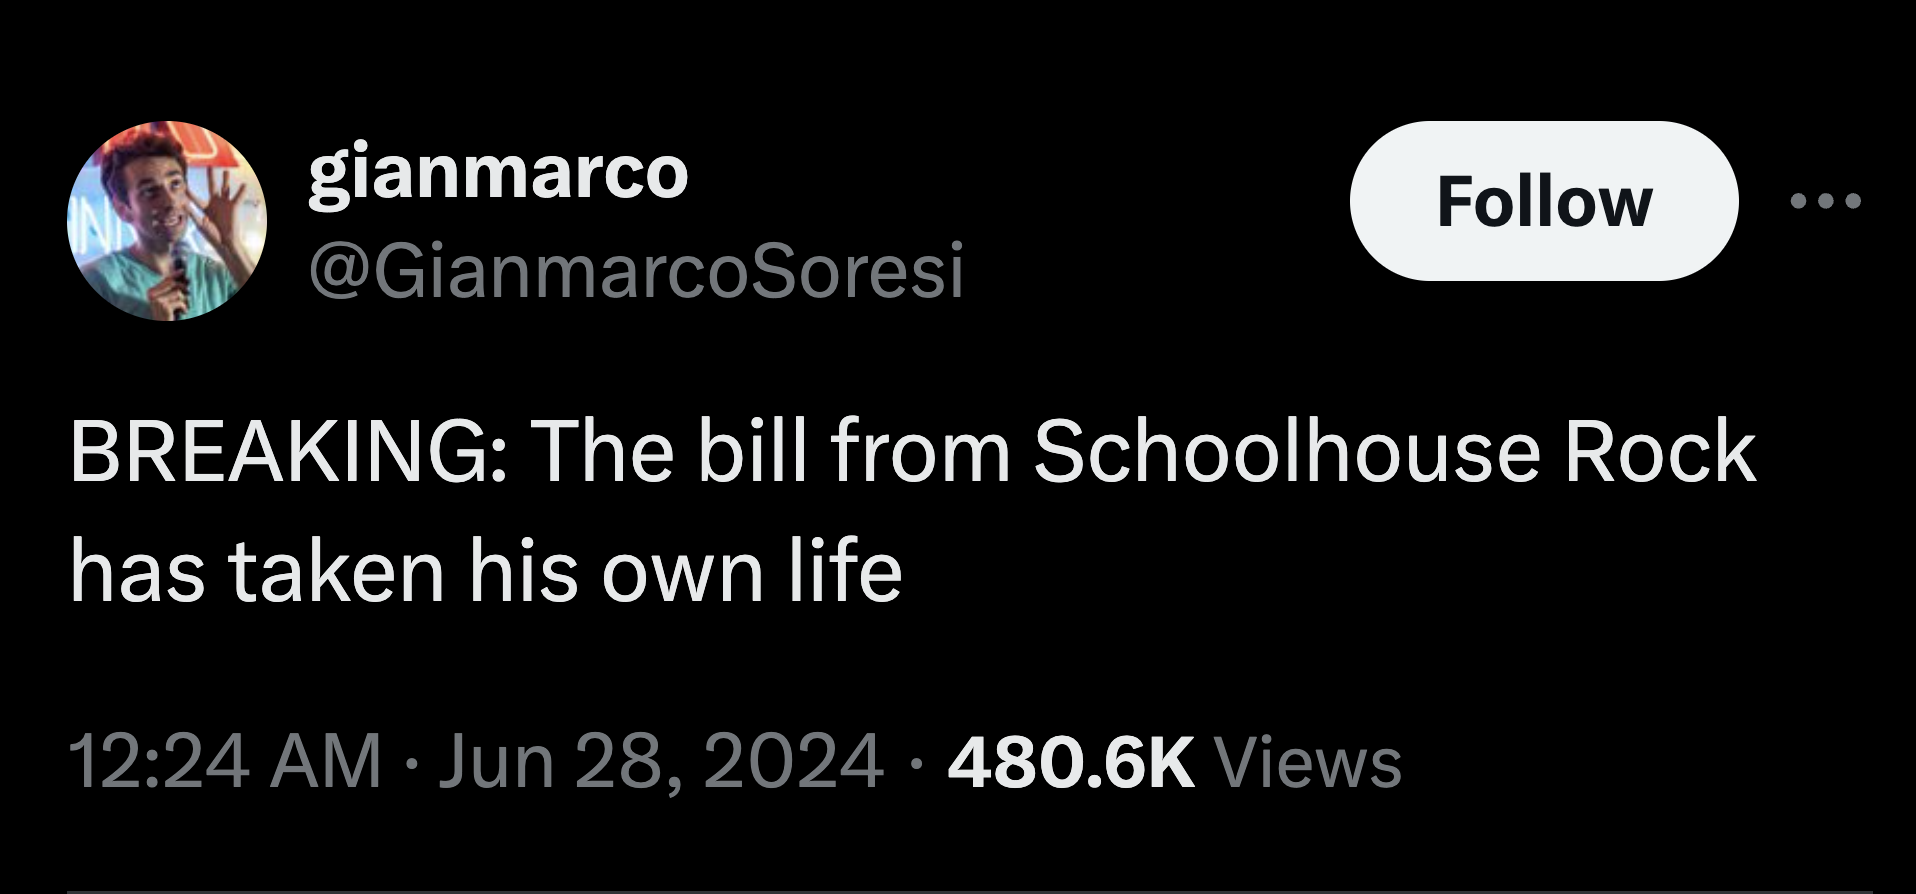 screenshot - gianmarco Breaking The bill from Schoolhouse Rock has taken his own life Views